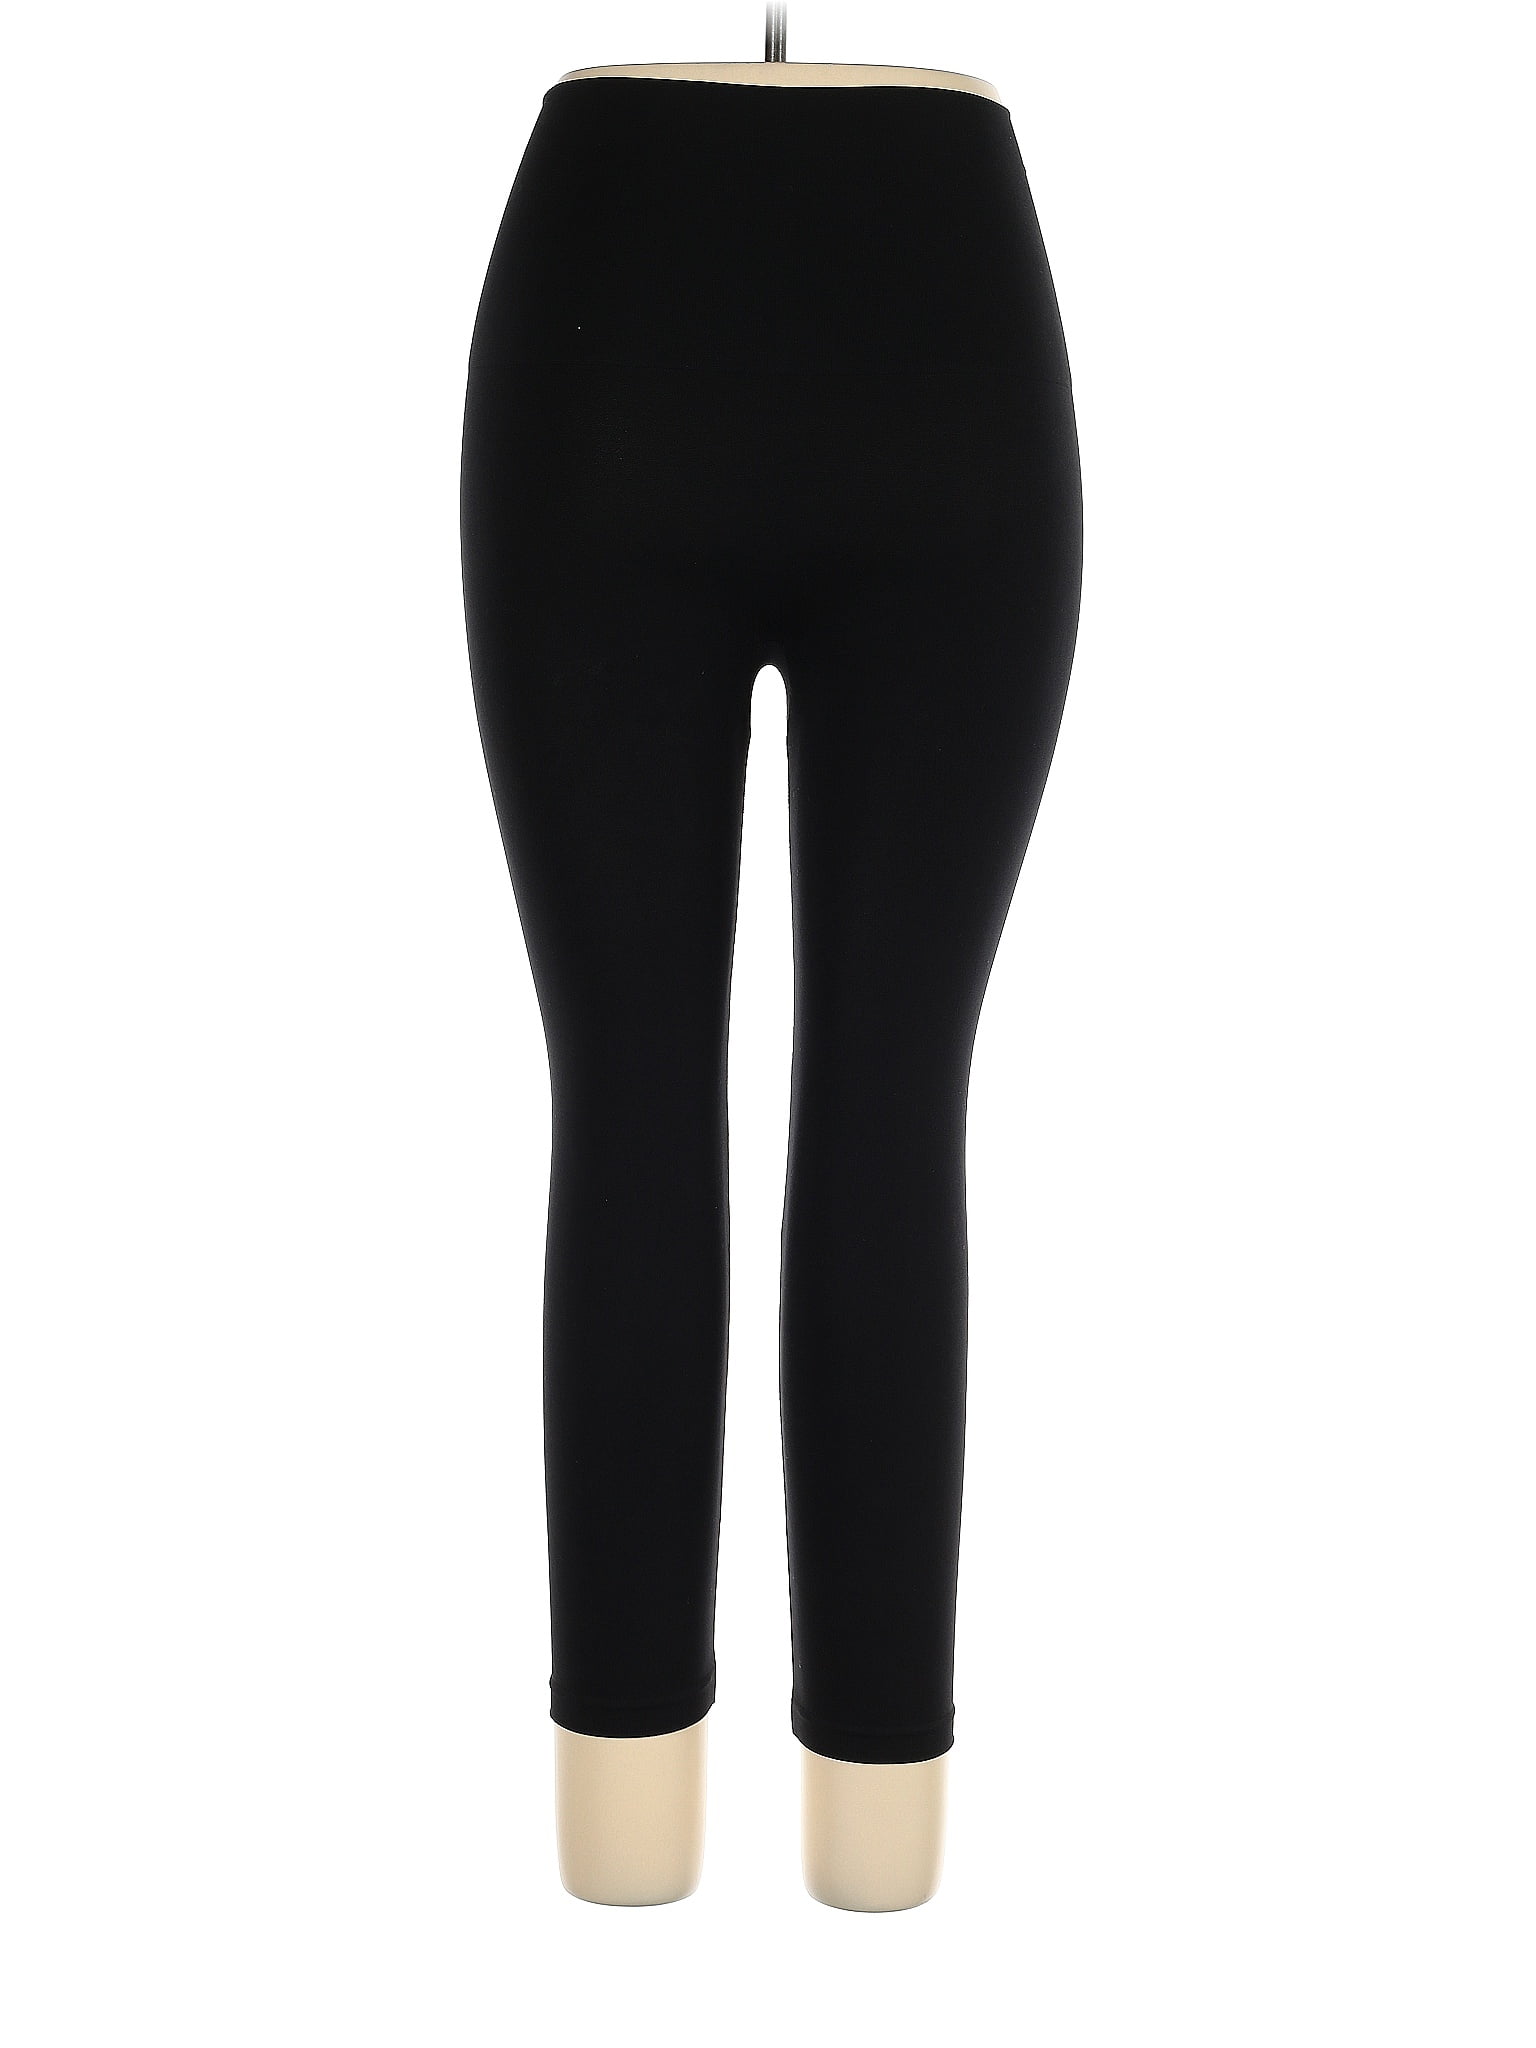 SPANX Black Active Pants Size XL - 45% off